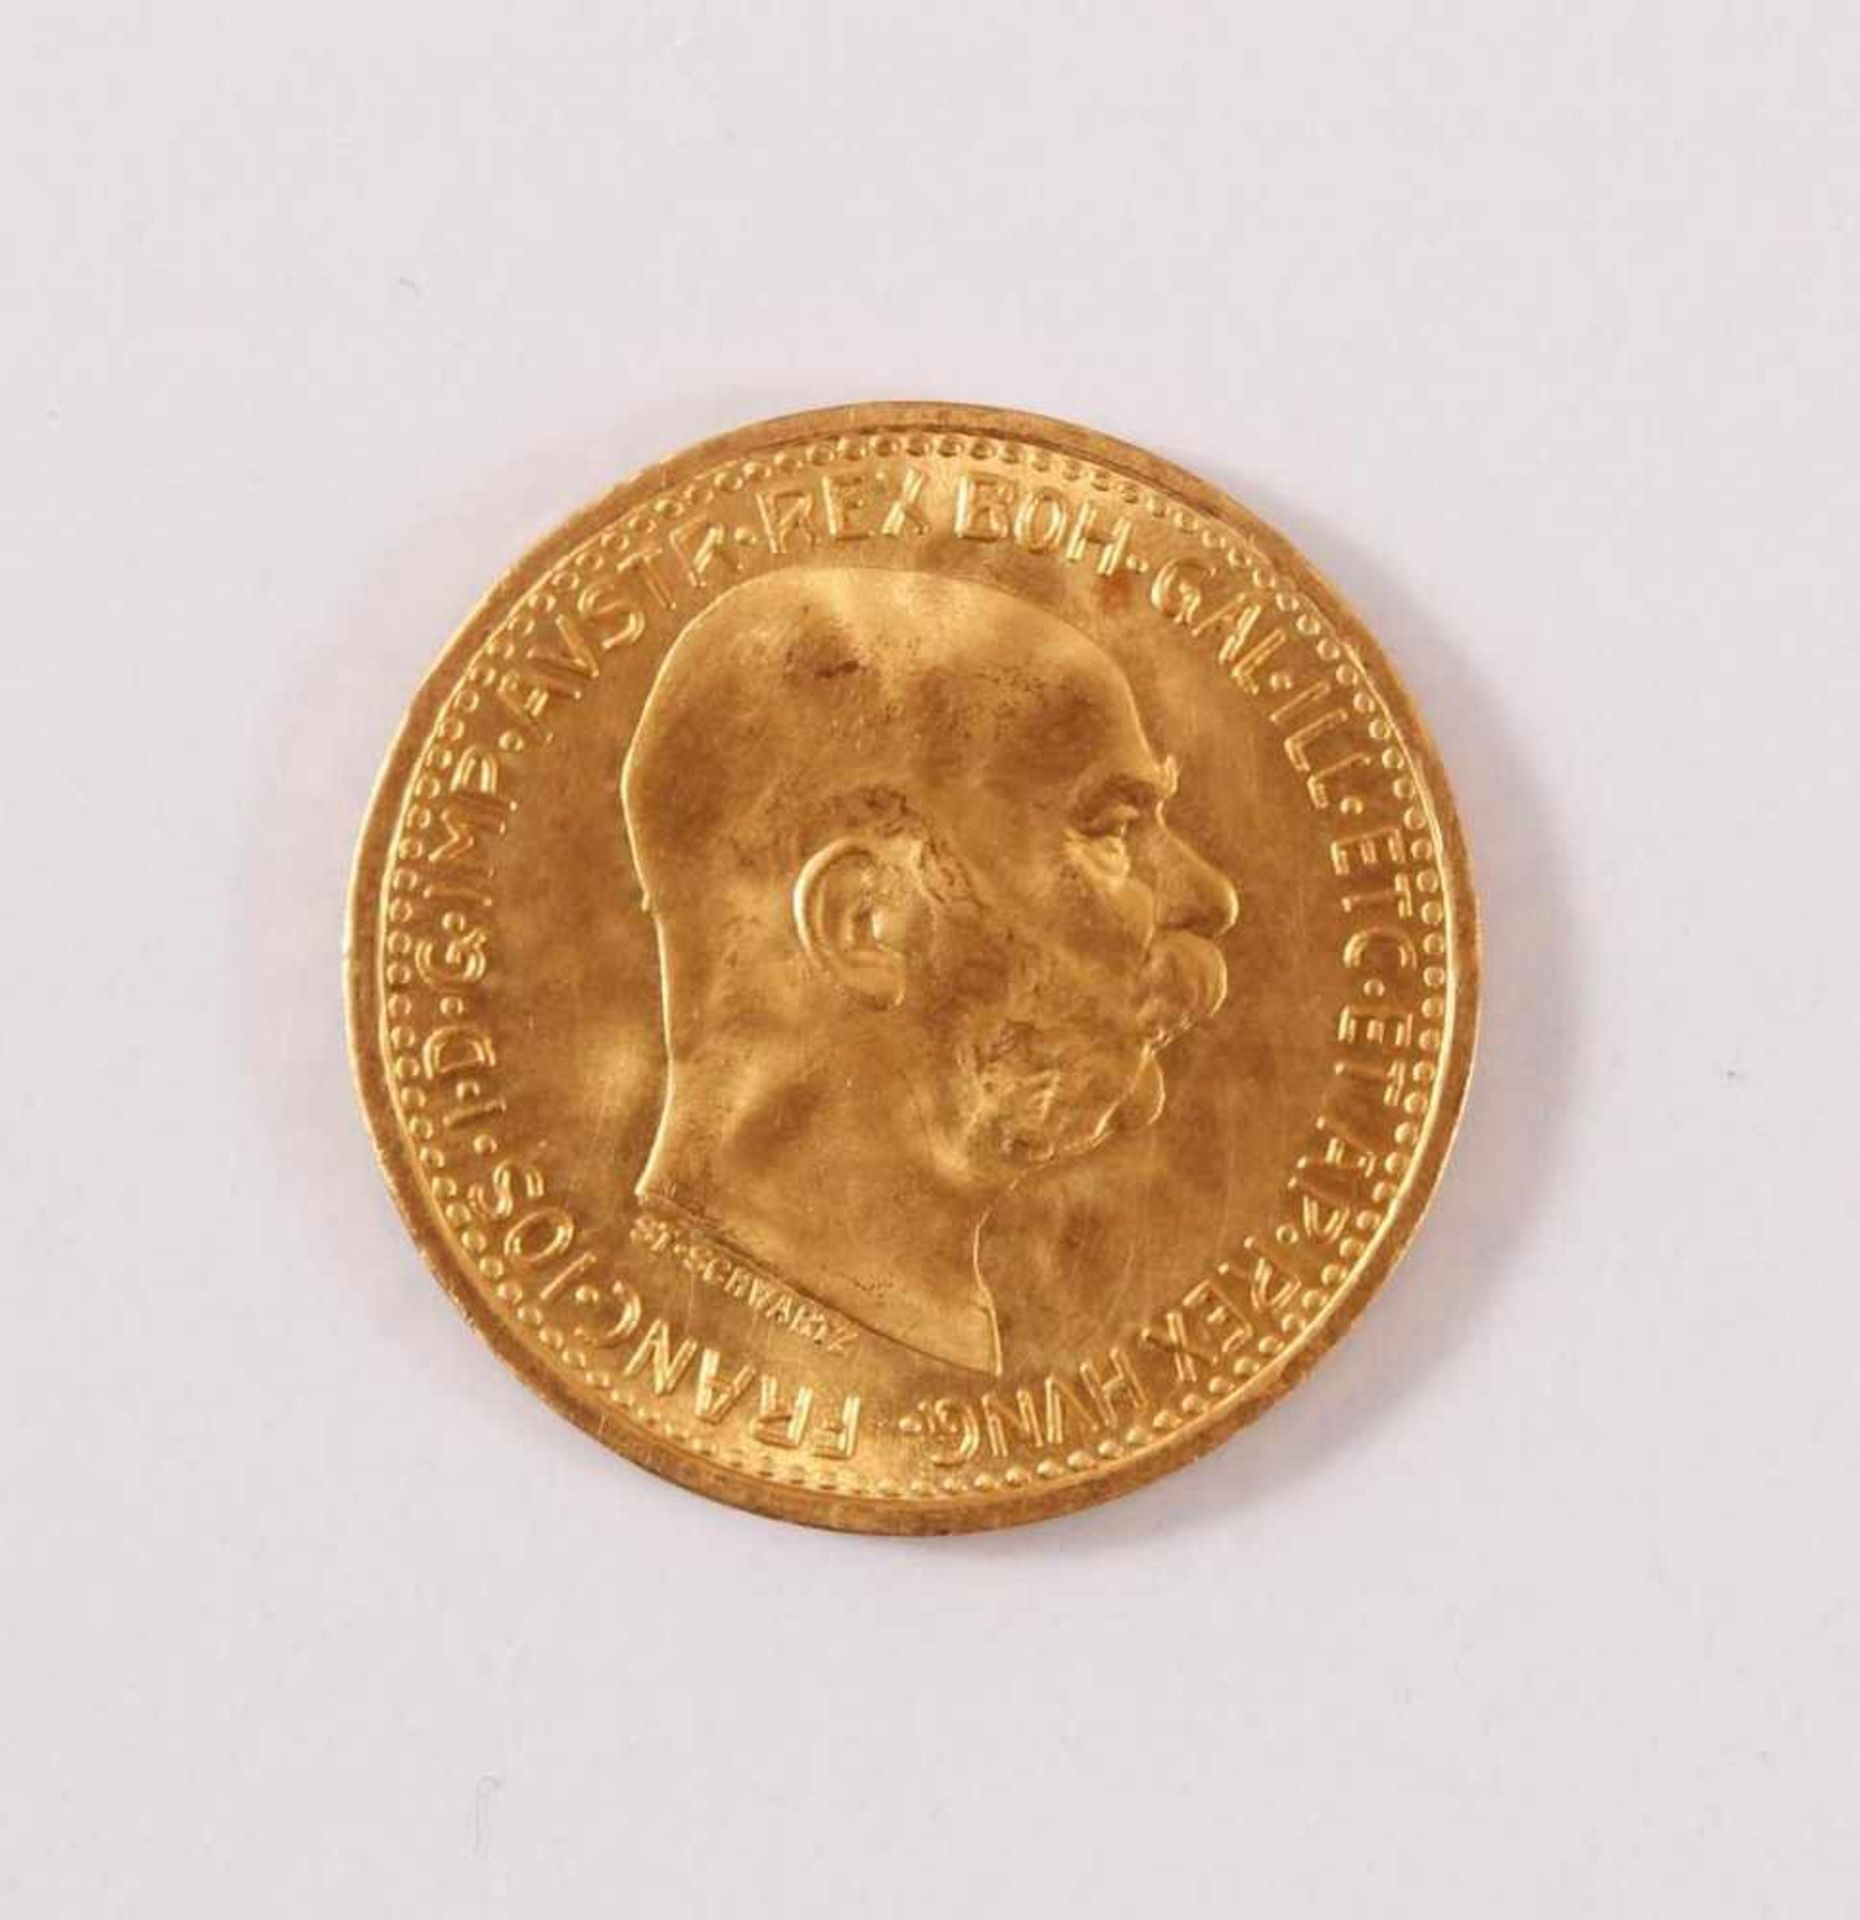 10 Kronen Franz Josef 1912900er Gold, D- 20 mm. 3,3 g in vz.- - -20.00 % buyer's premium on the